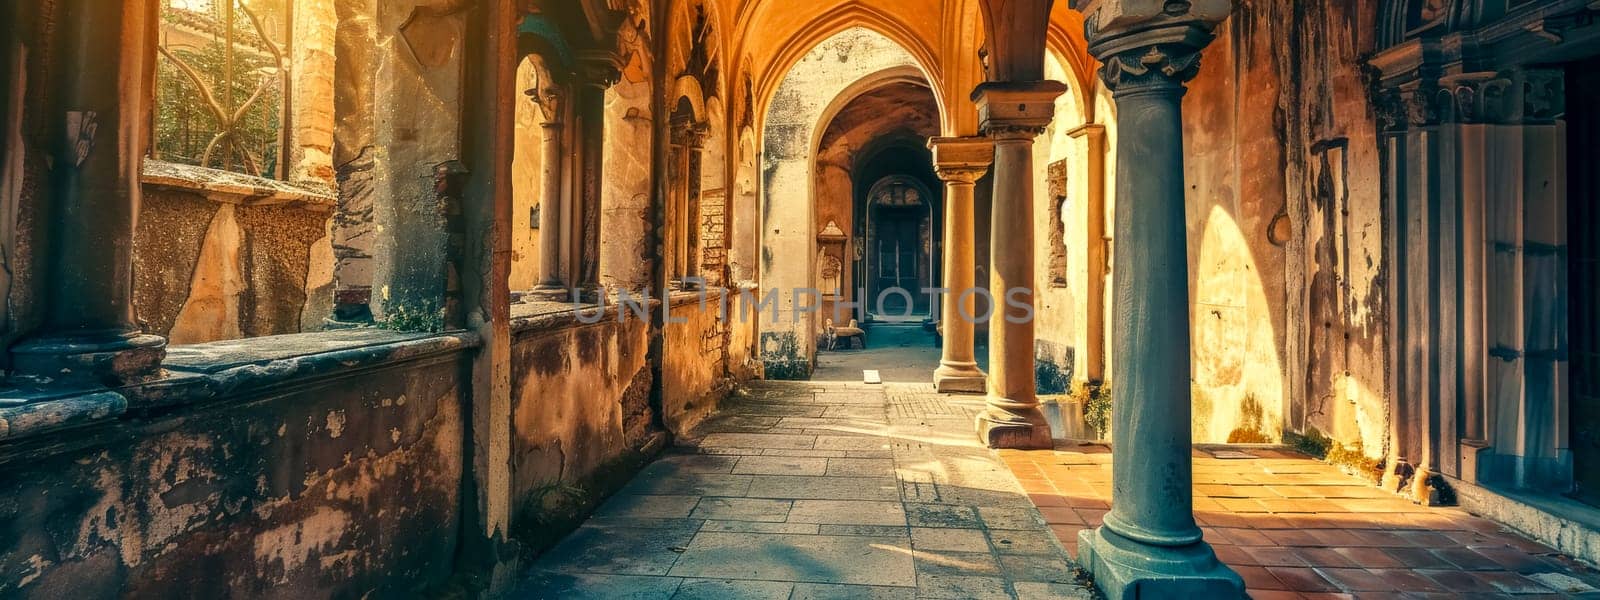 Enchanting sunlit cloister in european monastery by Edophoto